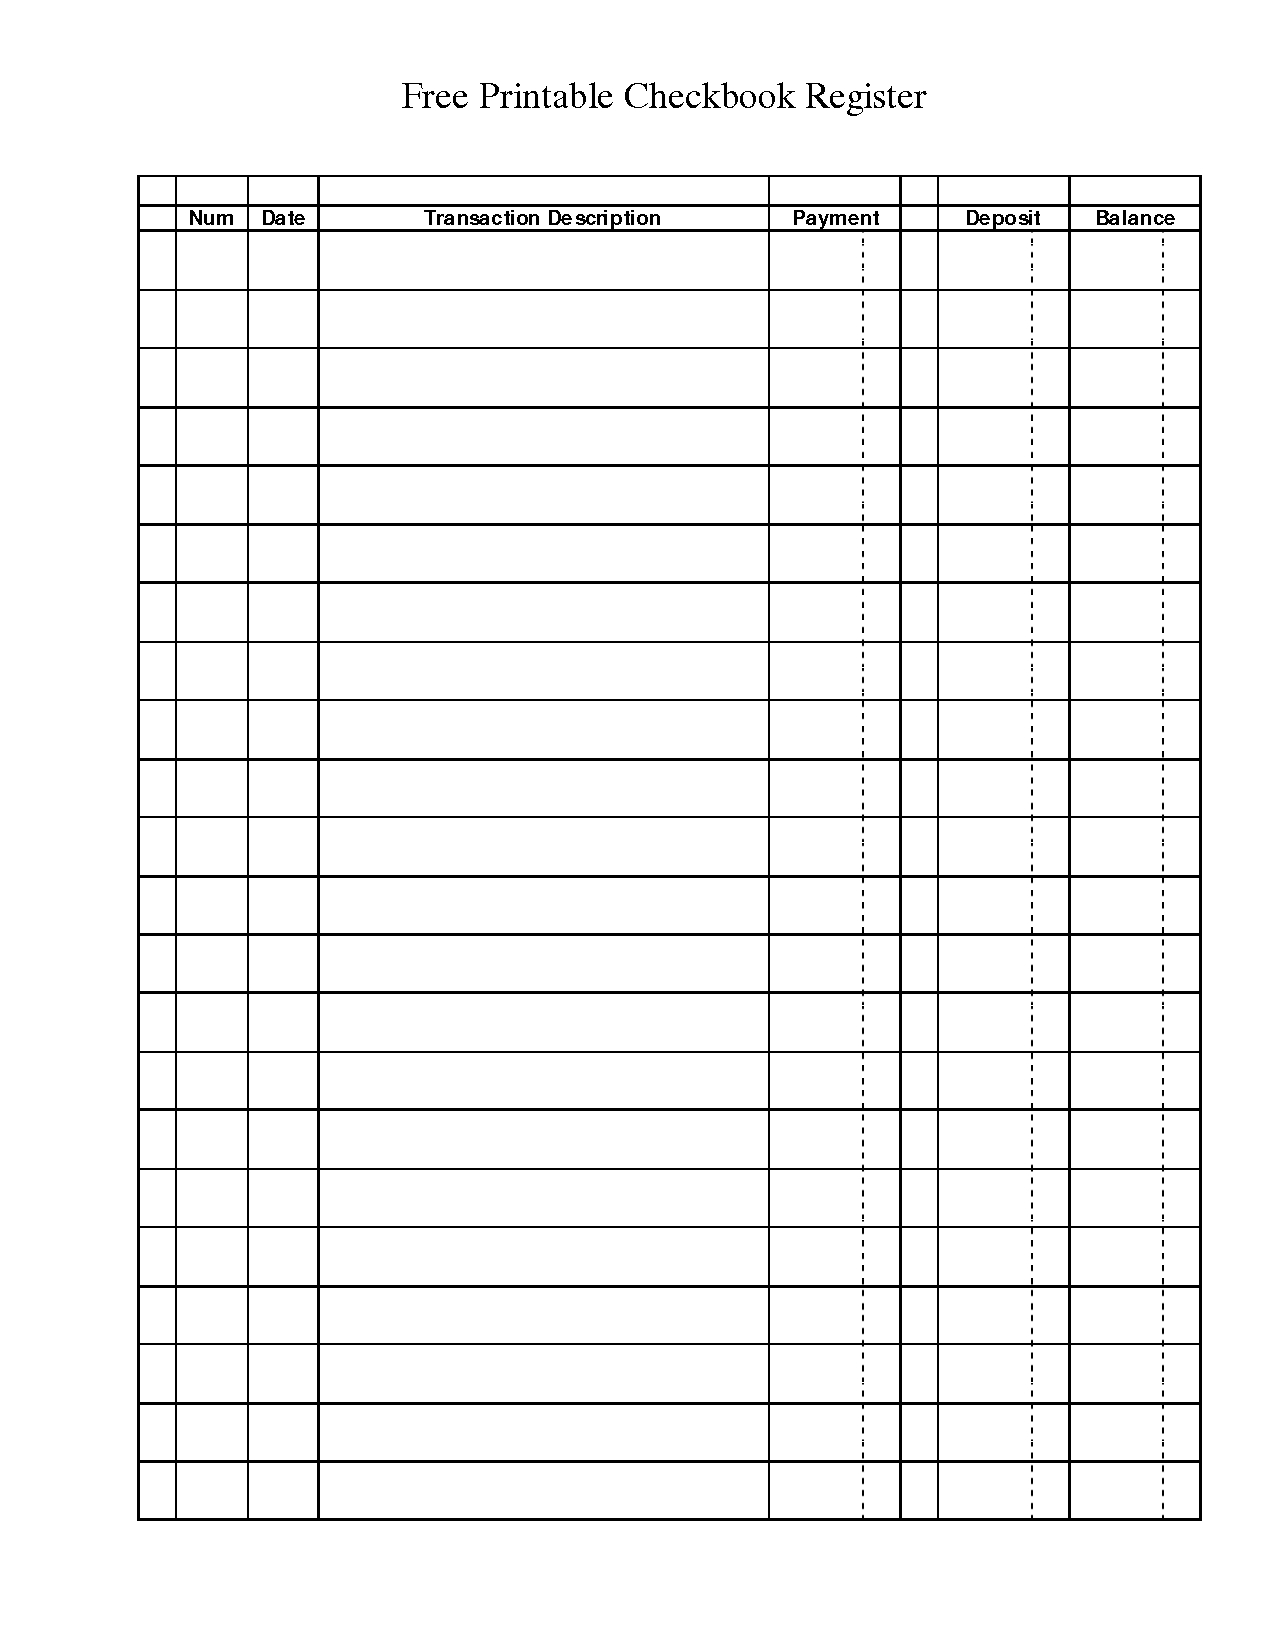 Free Printable Template Chores | Free Printable Check Register - Free Printable Check Register Templates